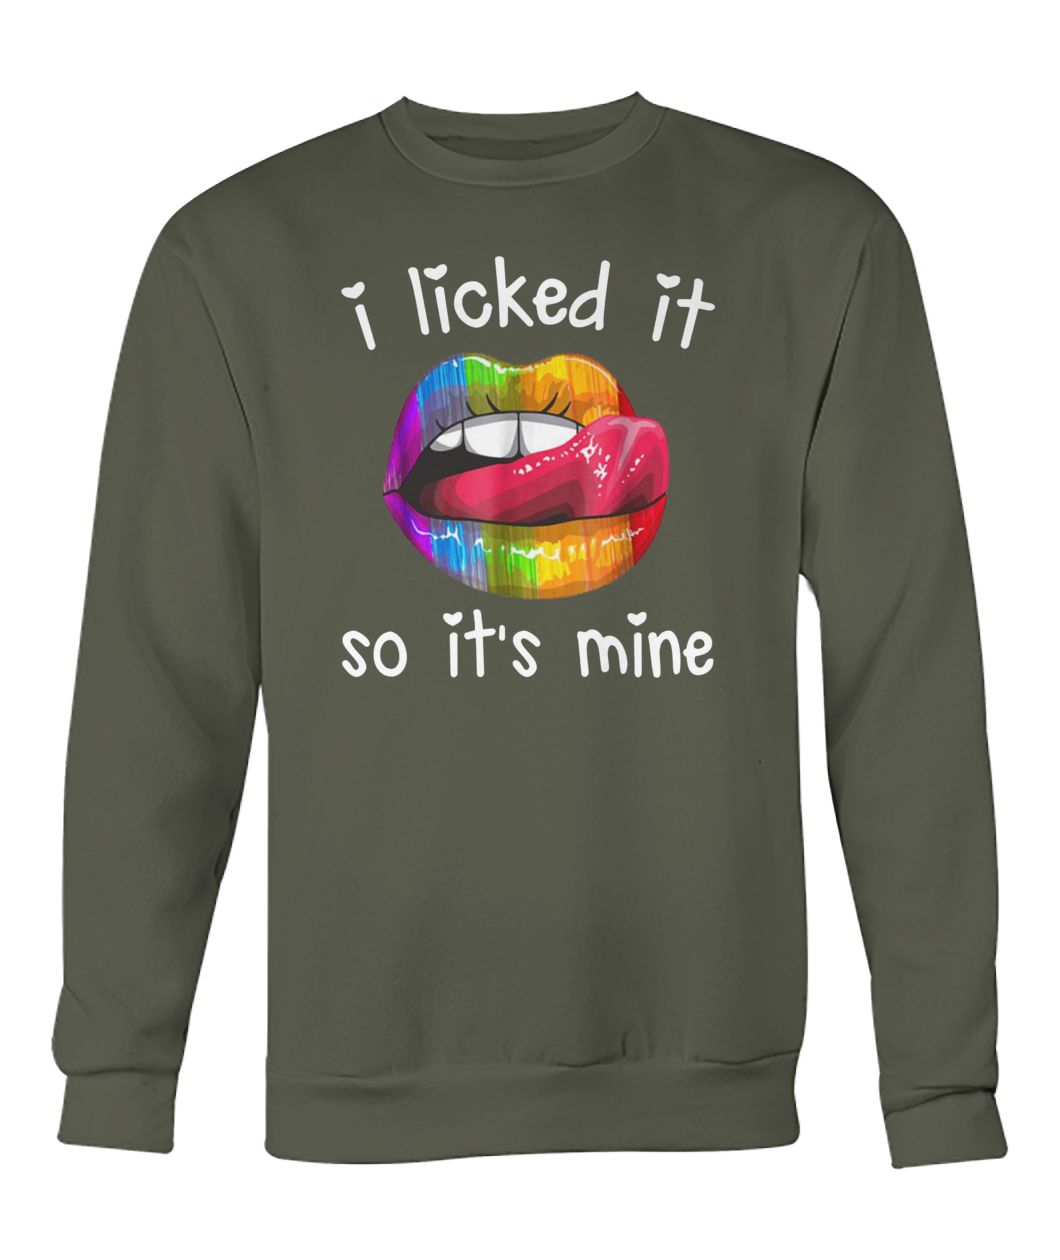 I licked it so it's mine LGBT crew neck sweatshirt